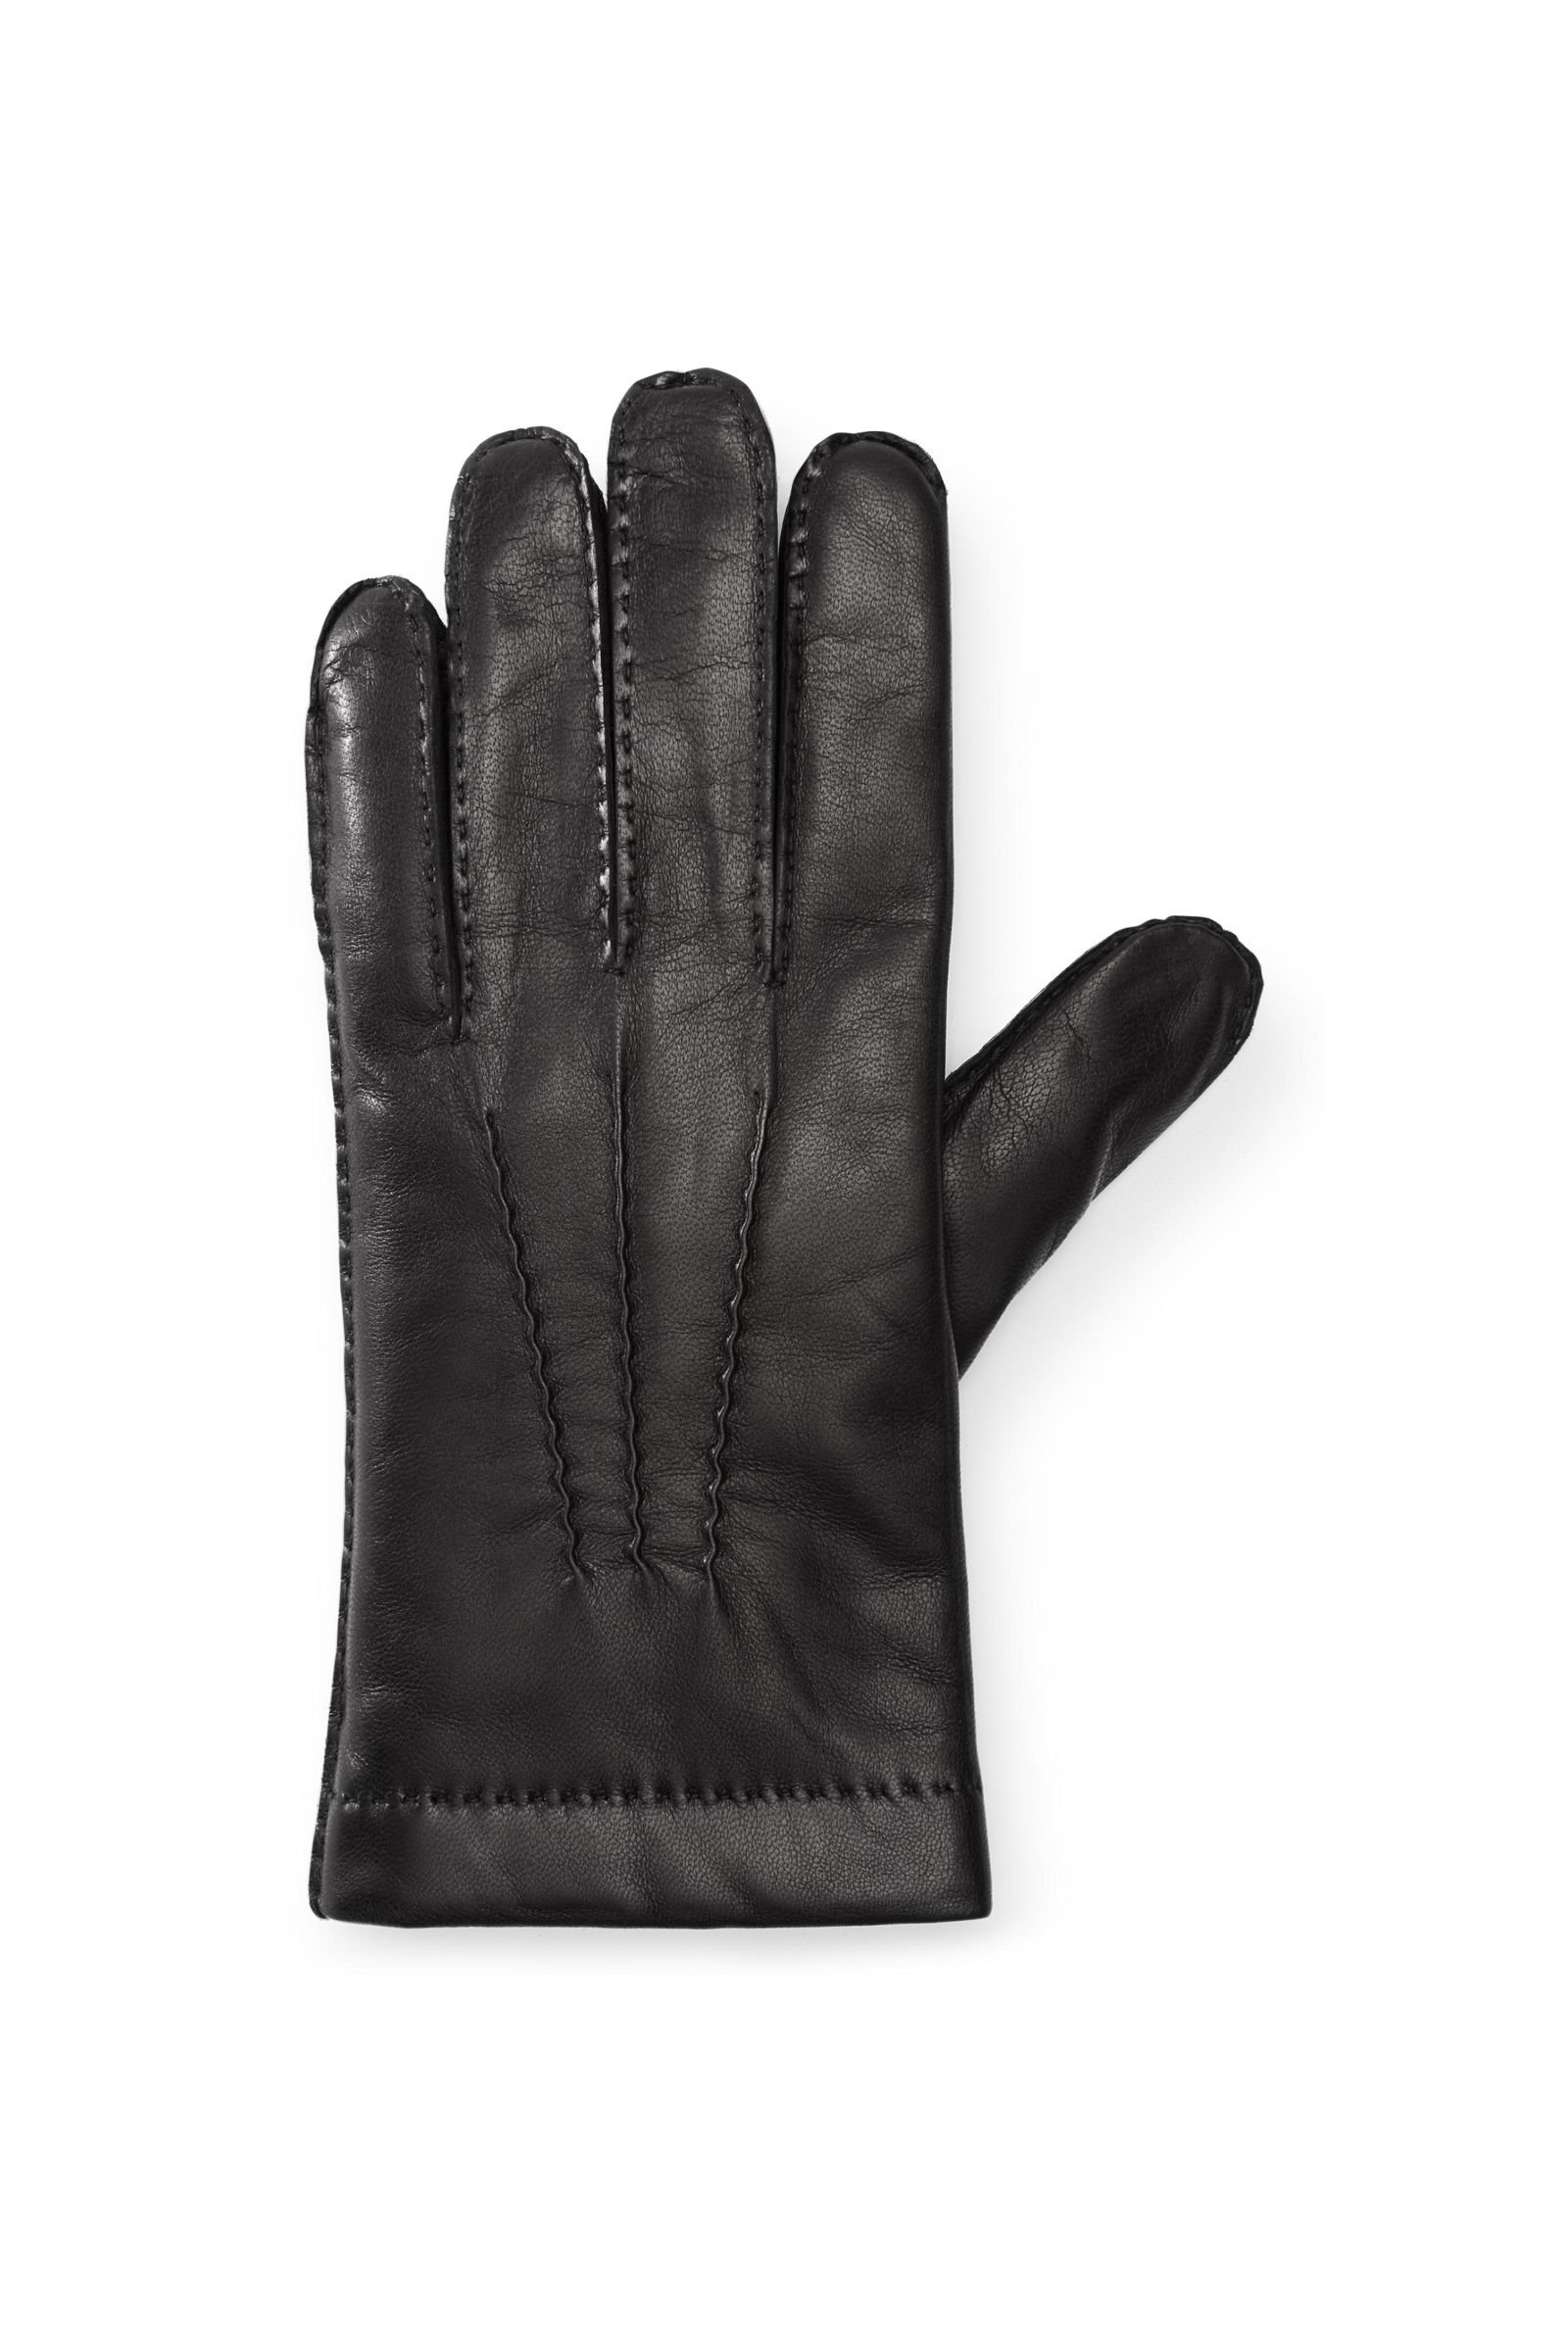 Gloves Napa leather black